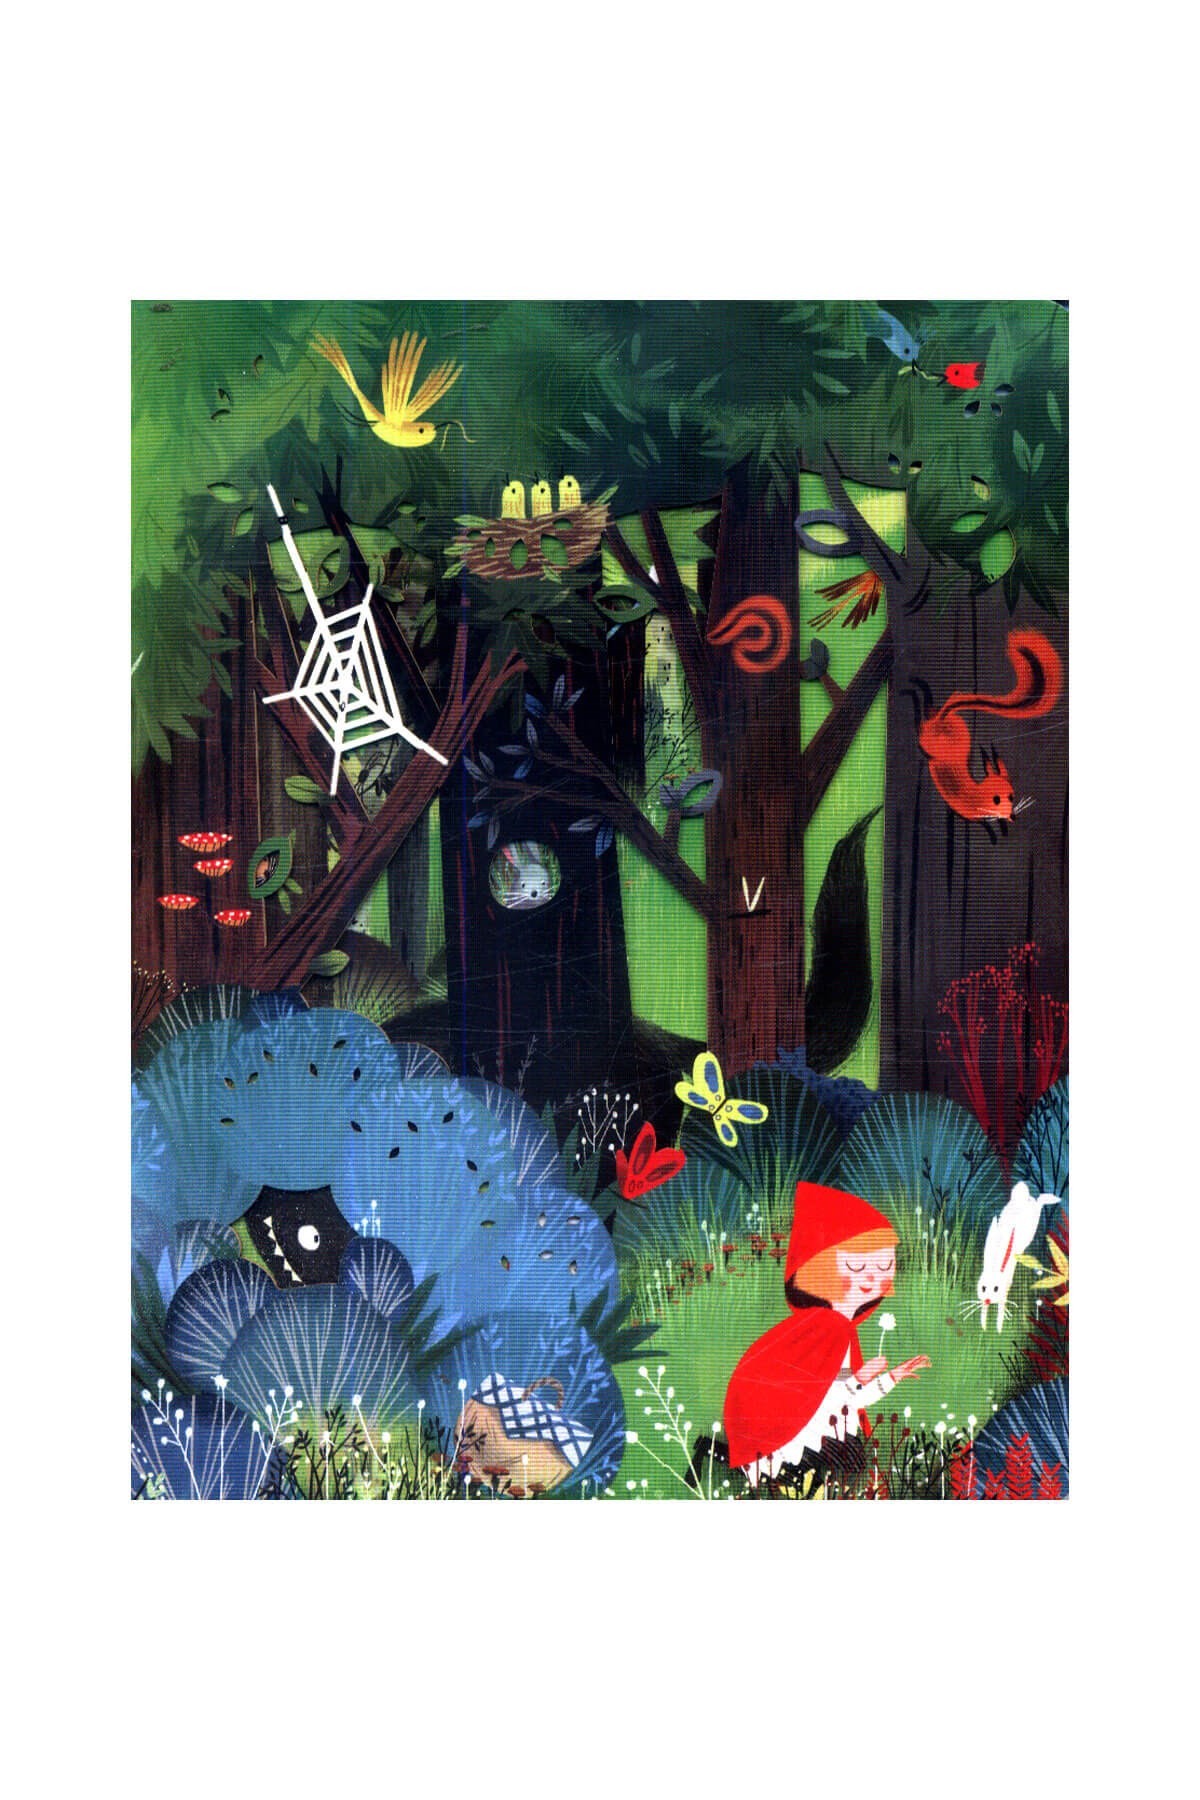 The Usborne Peep Inside a Fairy Tale Little Red Riding Hood